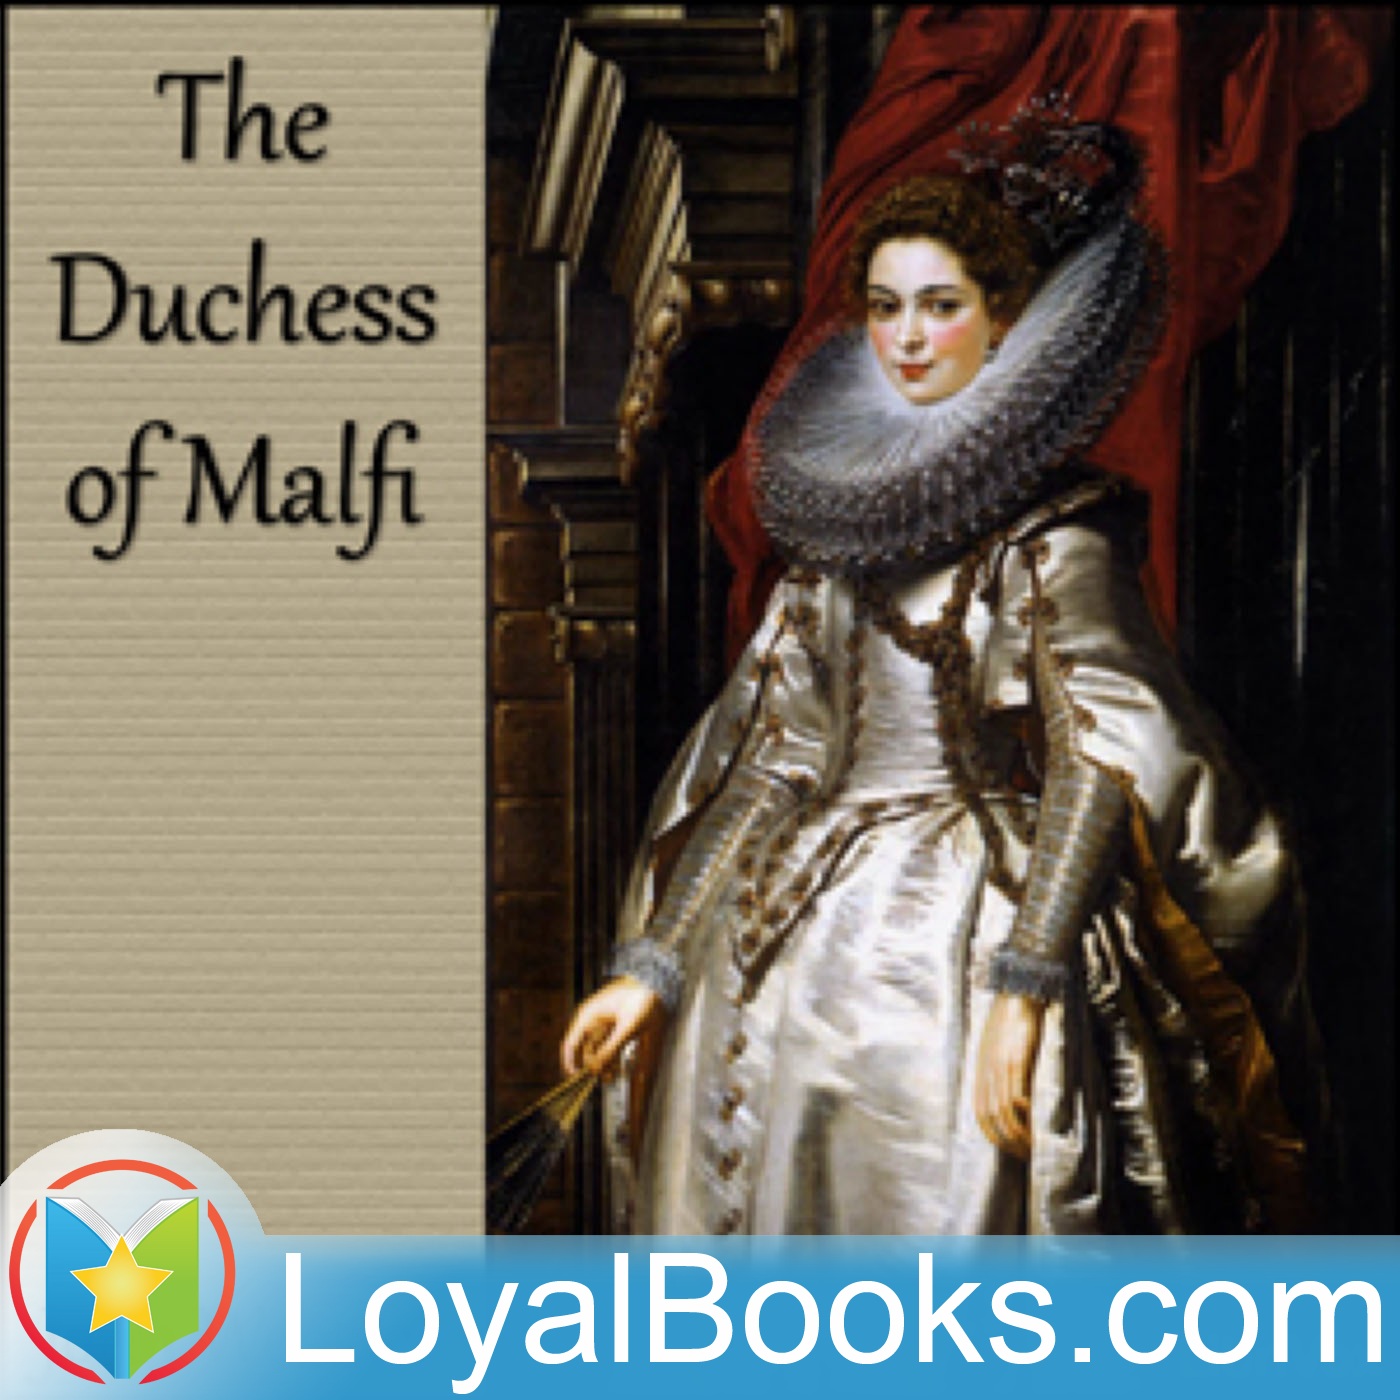 The Duchess of Malfi by John Webster